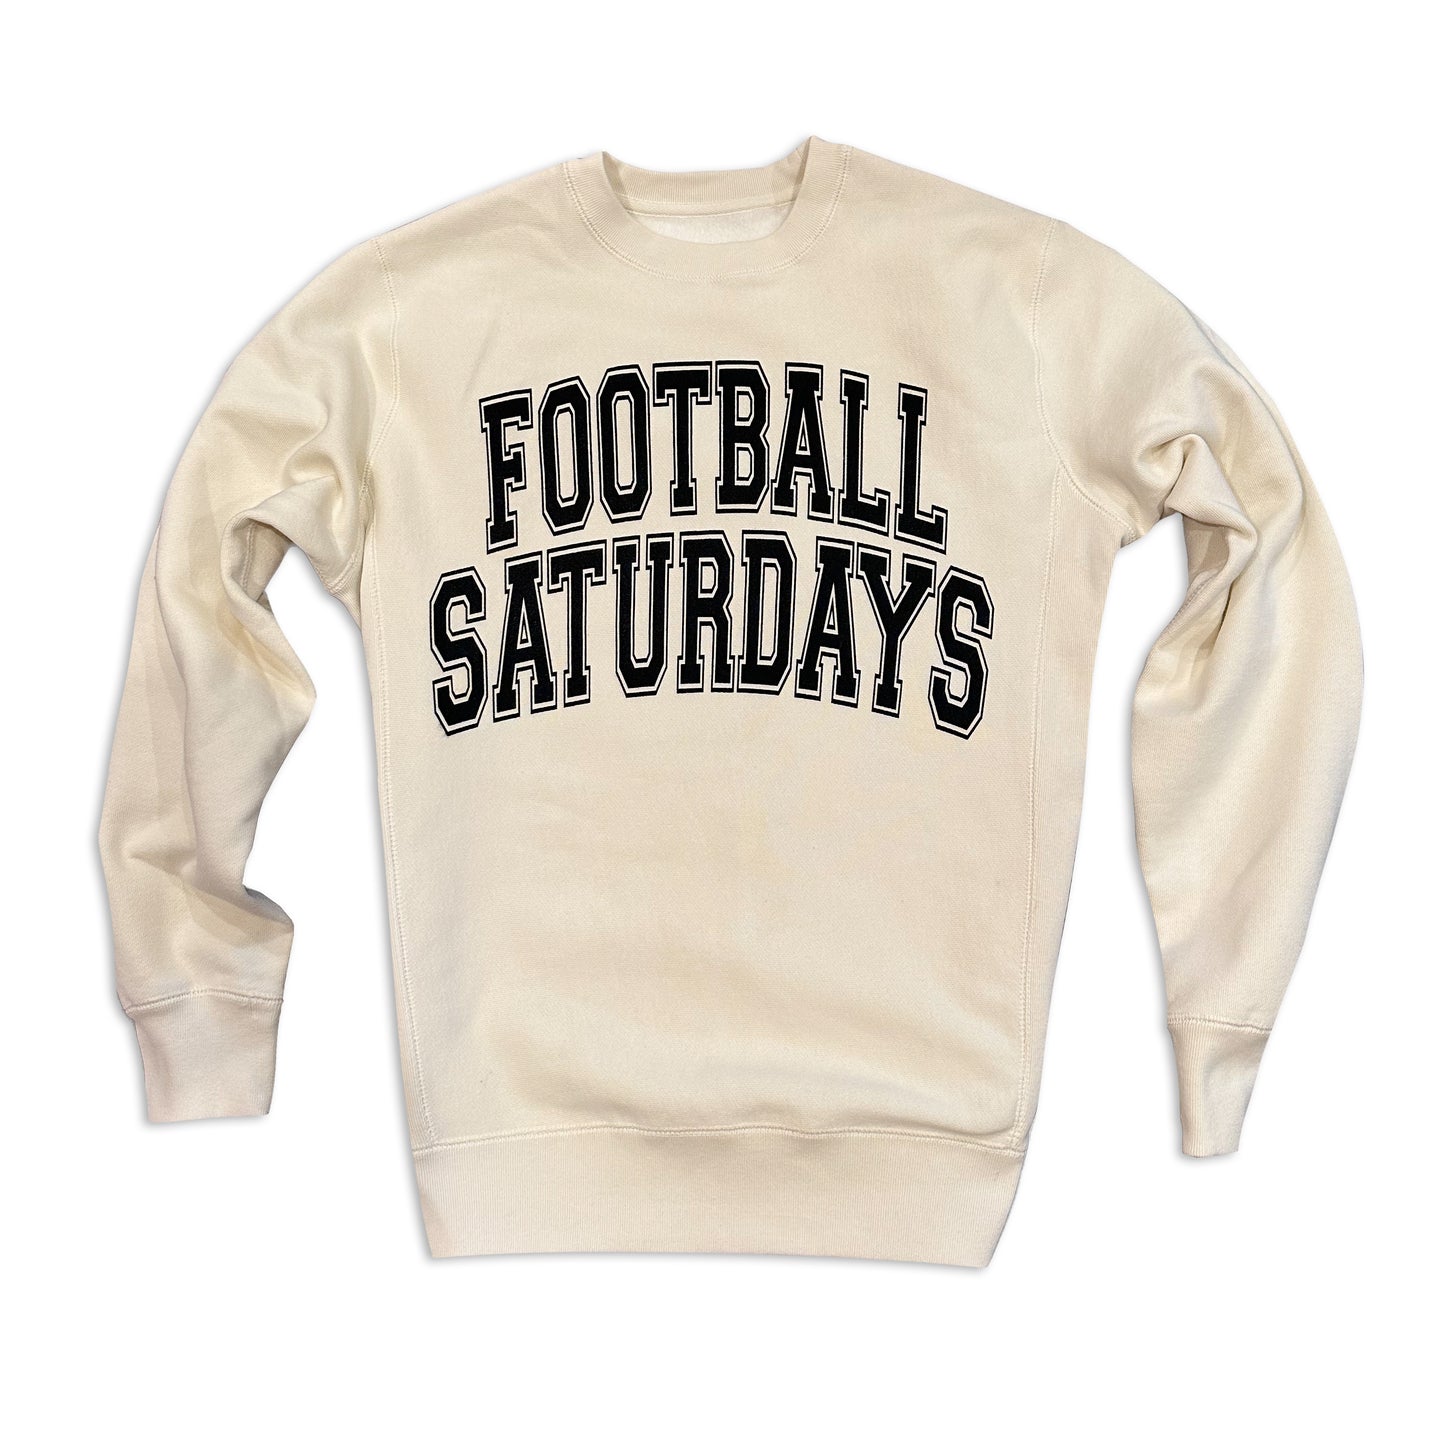 Football Saturdays sweatshirt